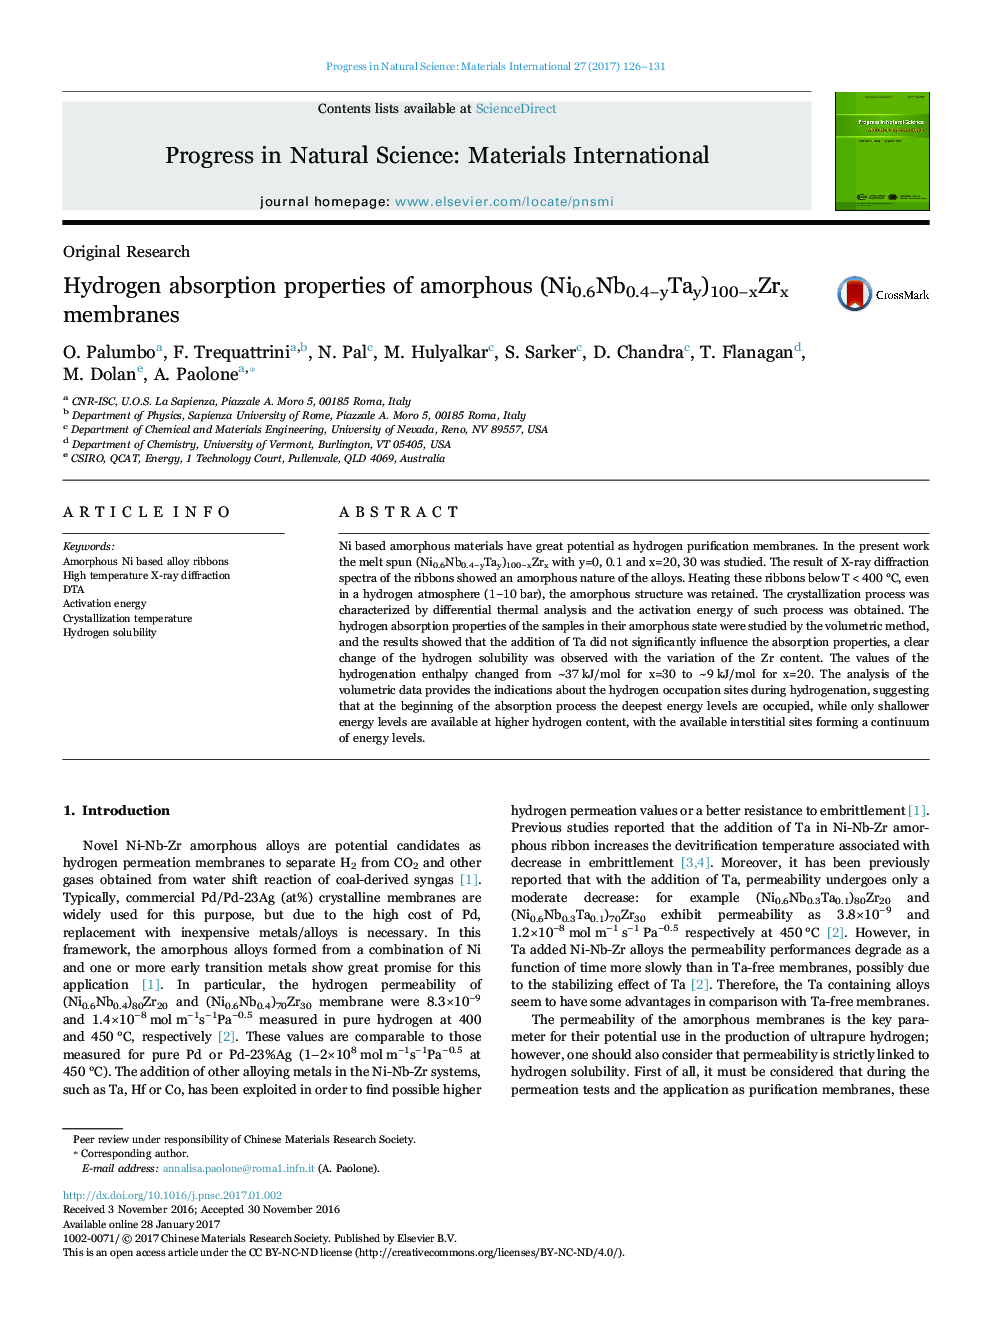 Hydrogen absorption properties of amorphous (Ni0.6Nb0.4âyTay)100âxZrx membranes